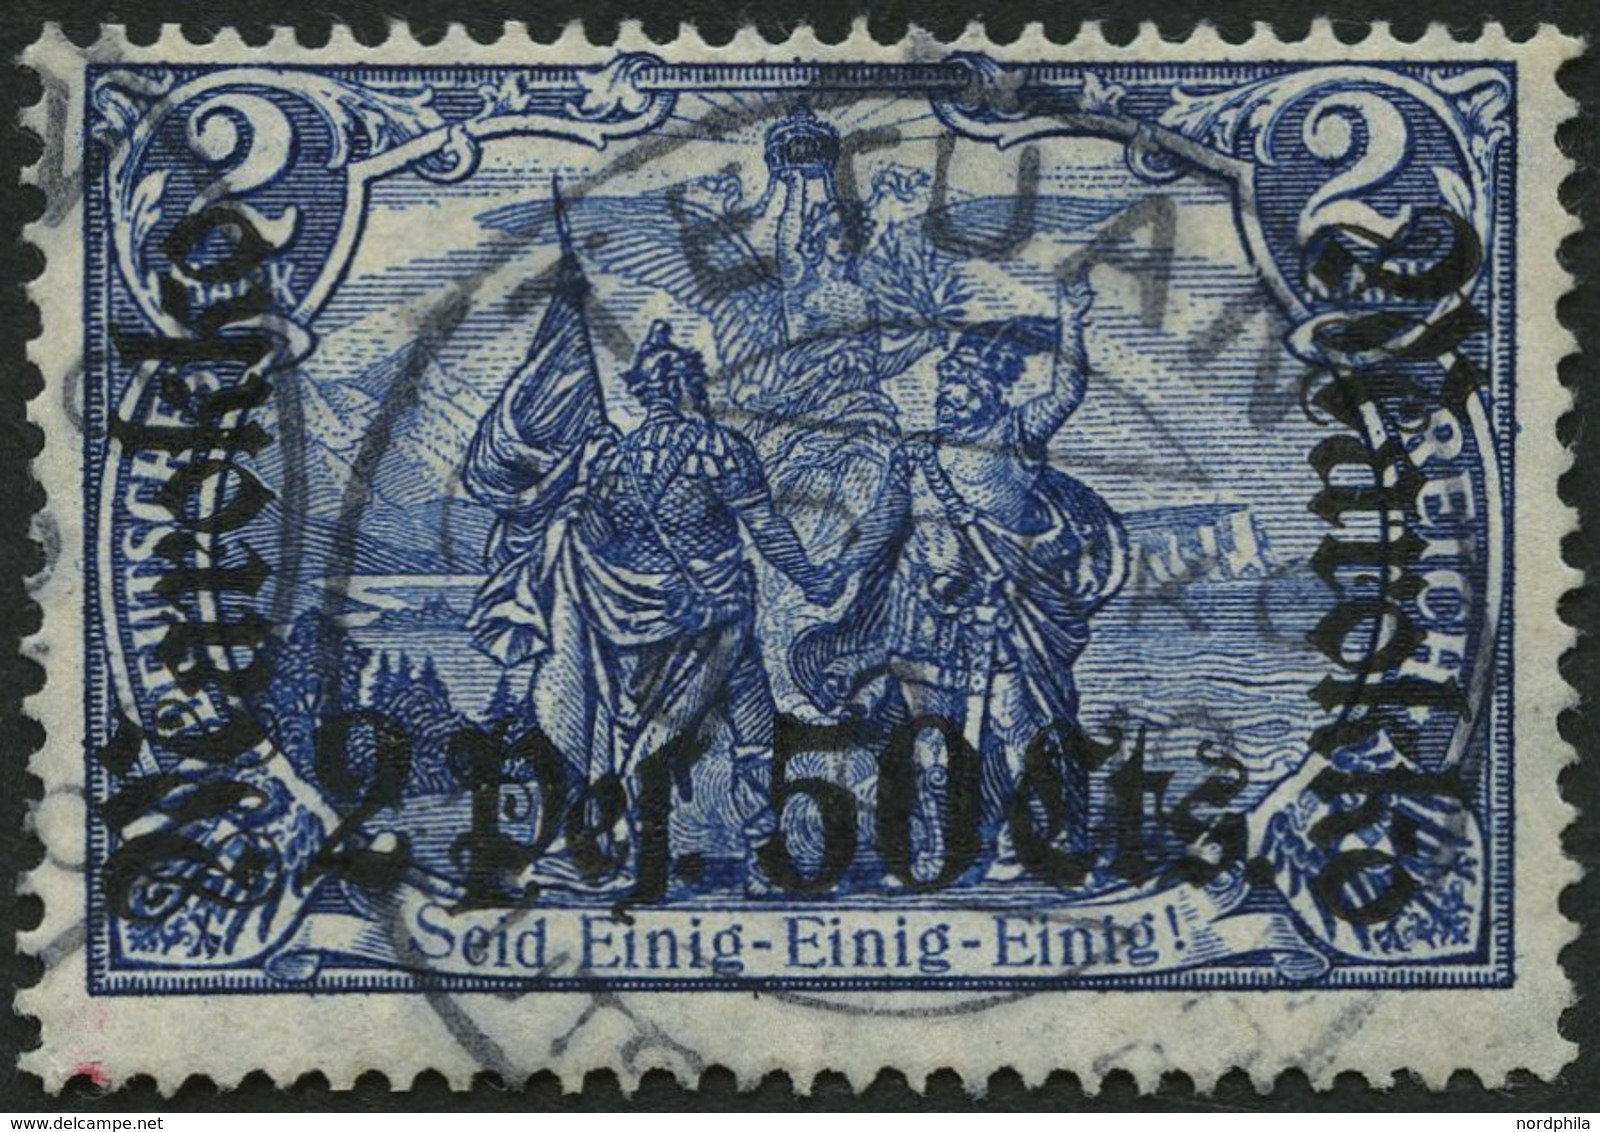 DP IN MAROKKO 56IA O, 1911, 2 P. 50 C. Auf 2 M., Friedensdruck, Stempel TETUAN, Pracht, Gepr. W. Engel - Maroc (bureaux)